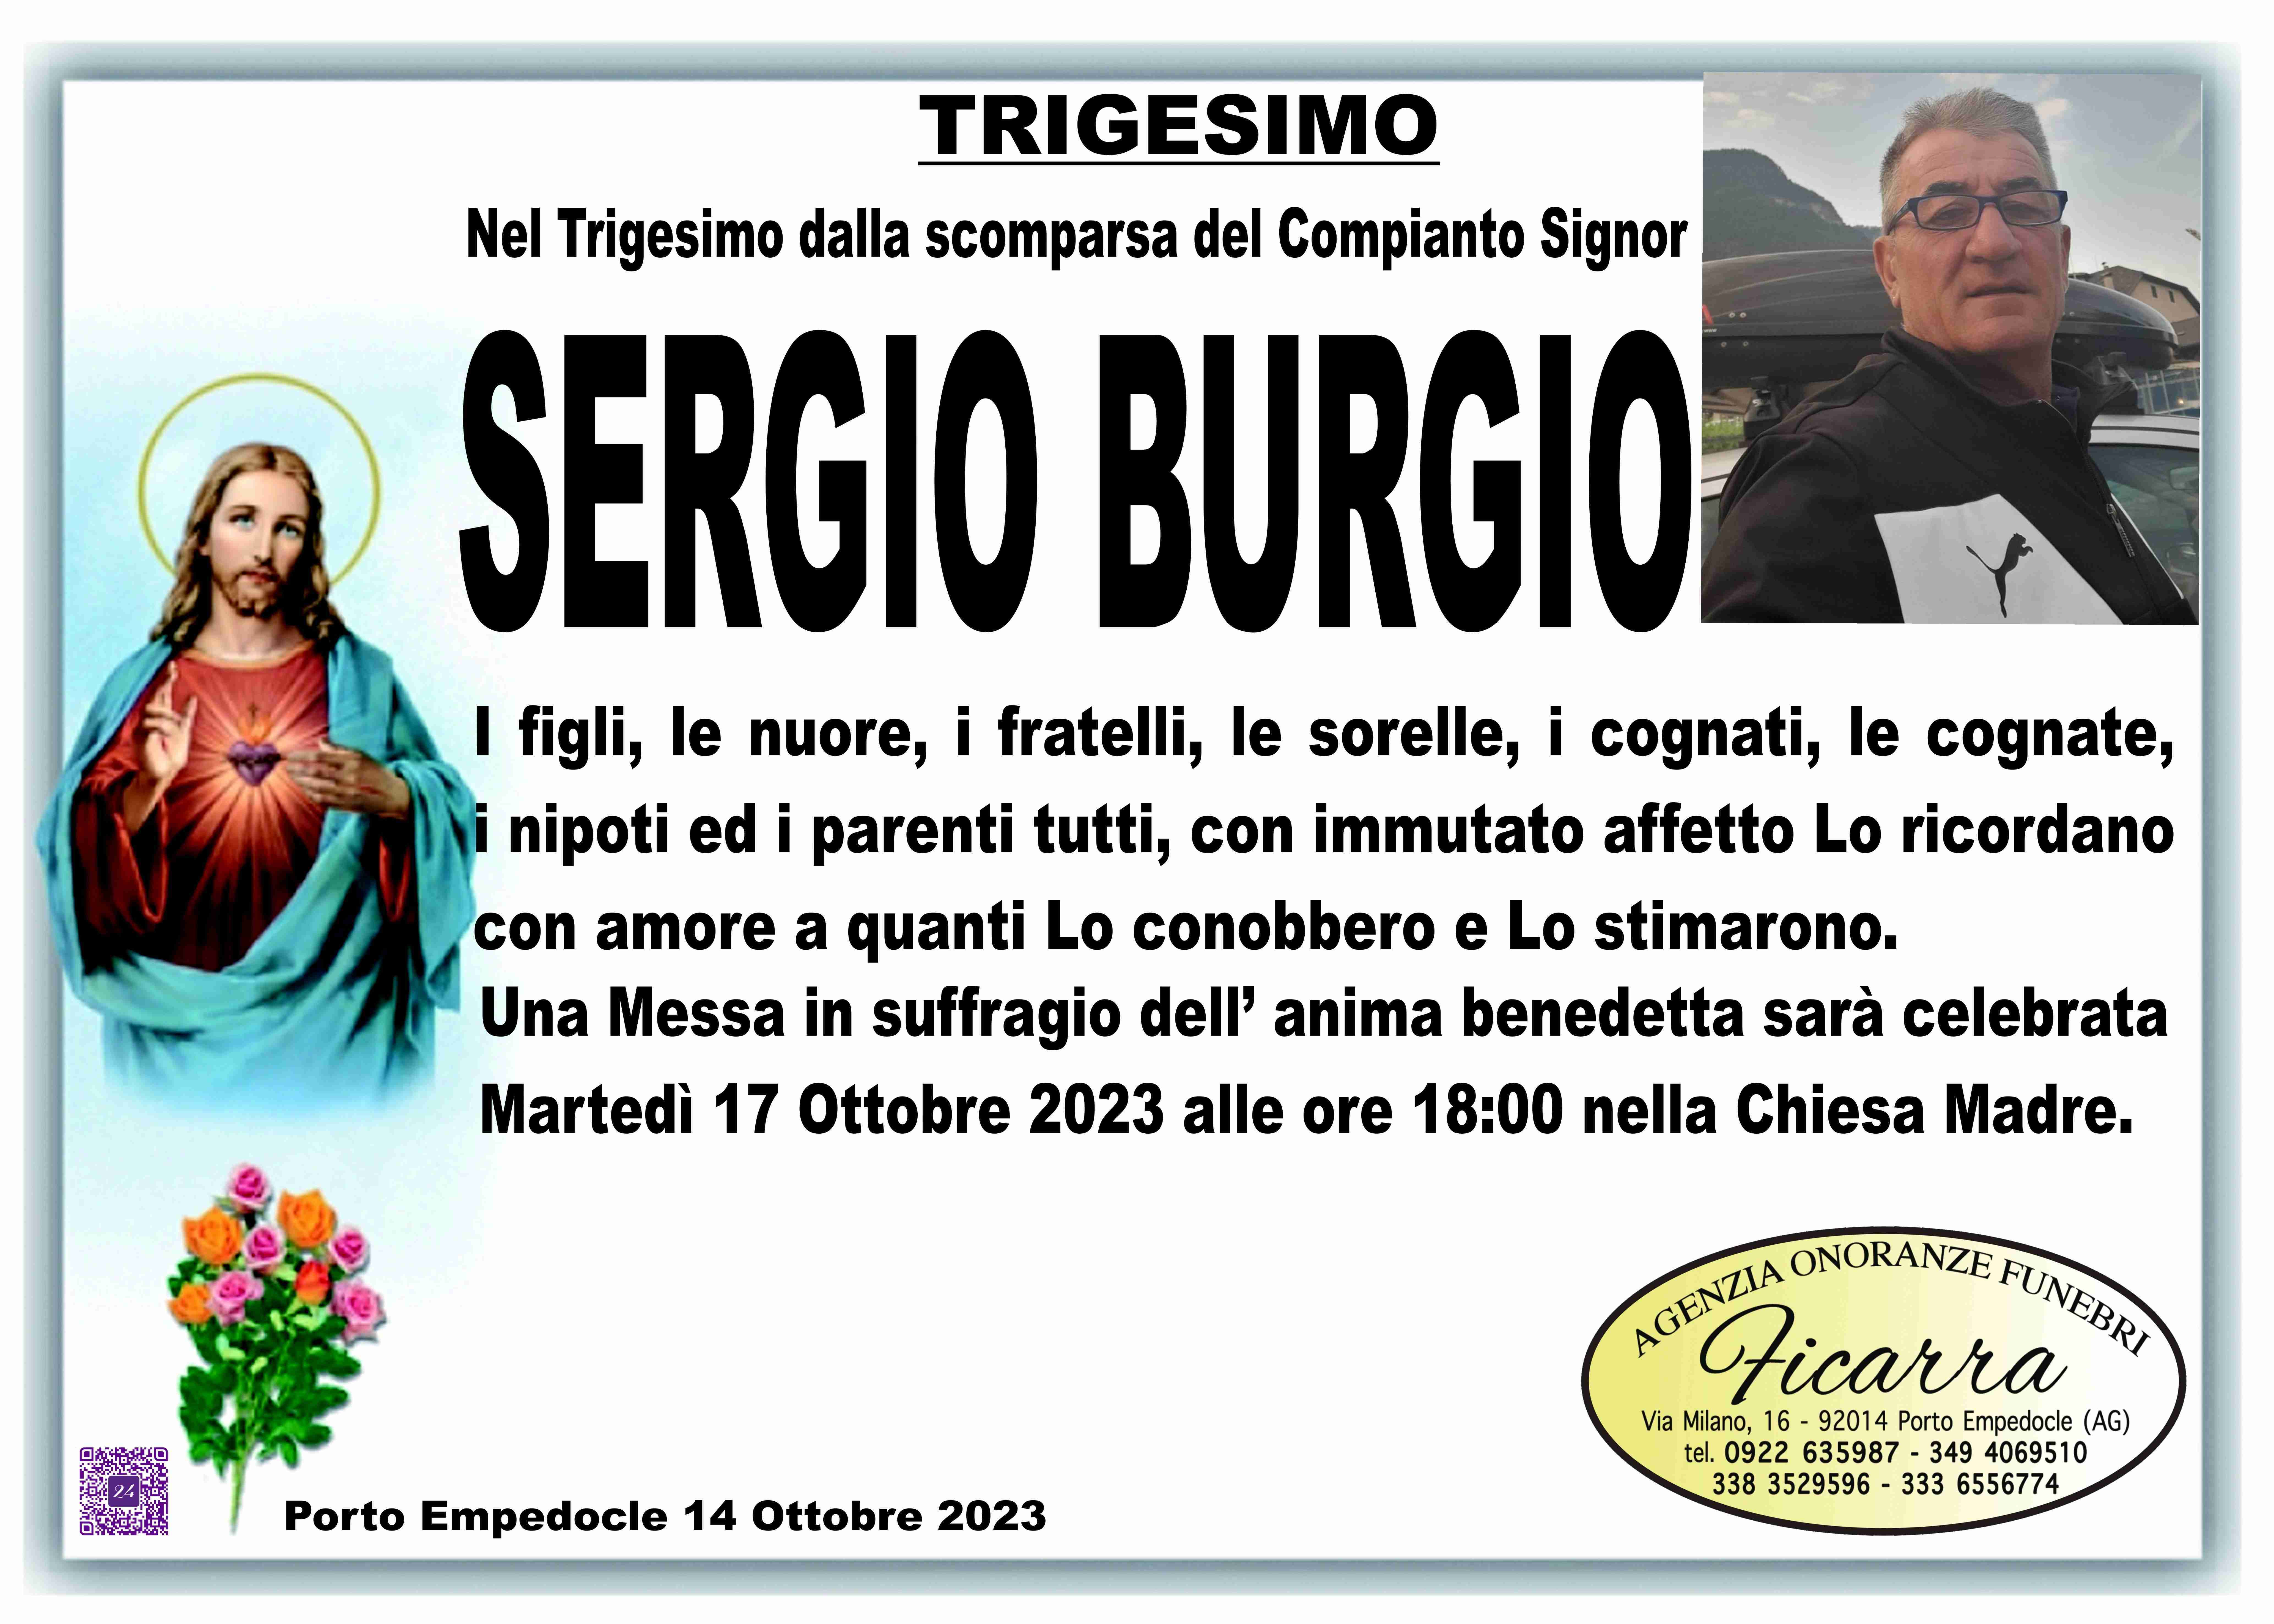 Sergio Burgio